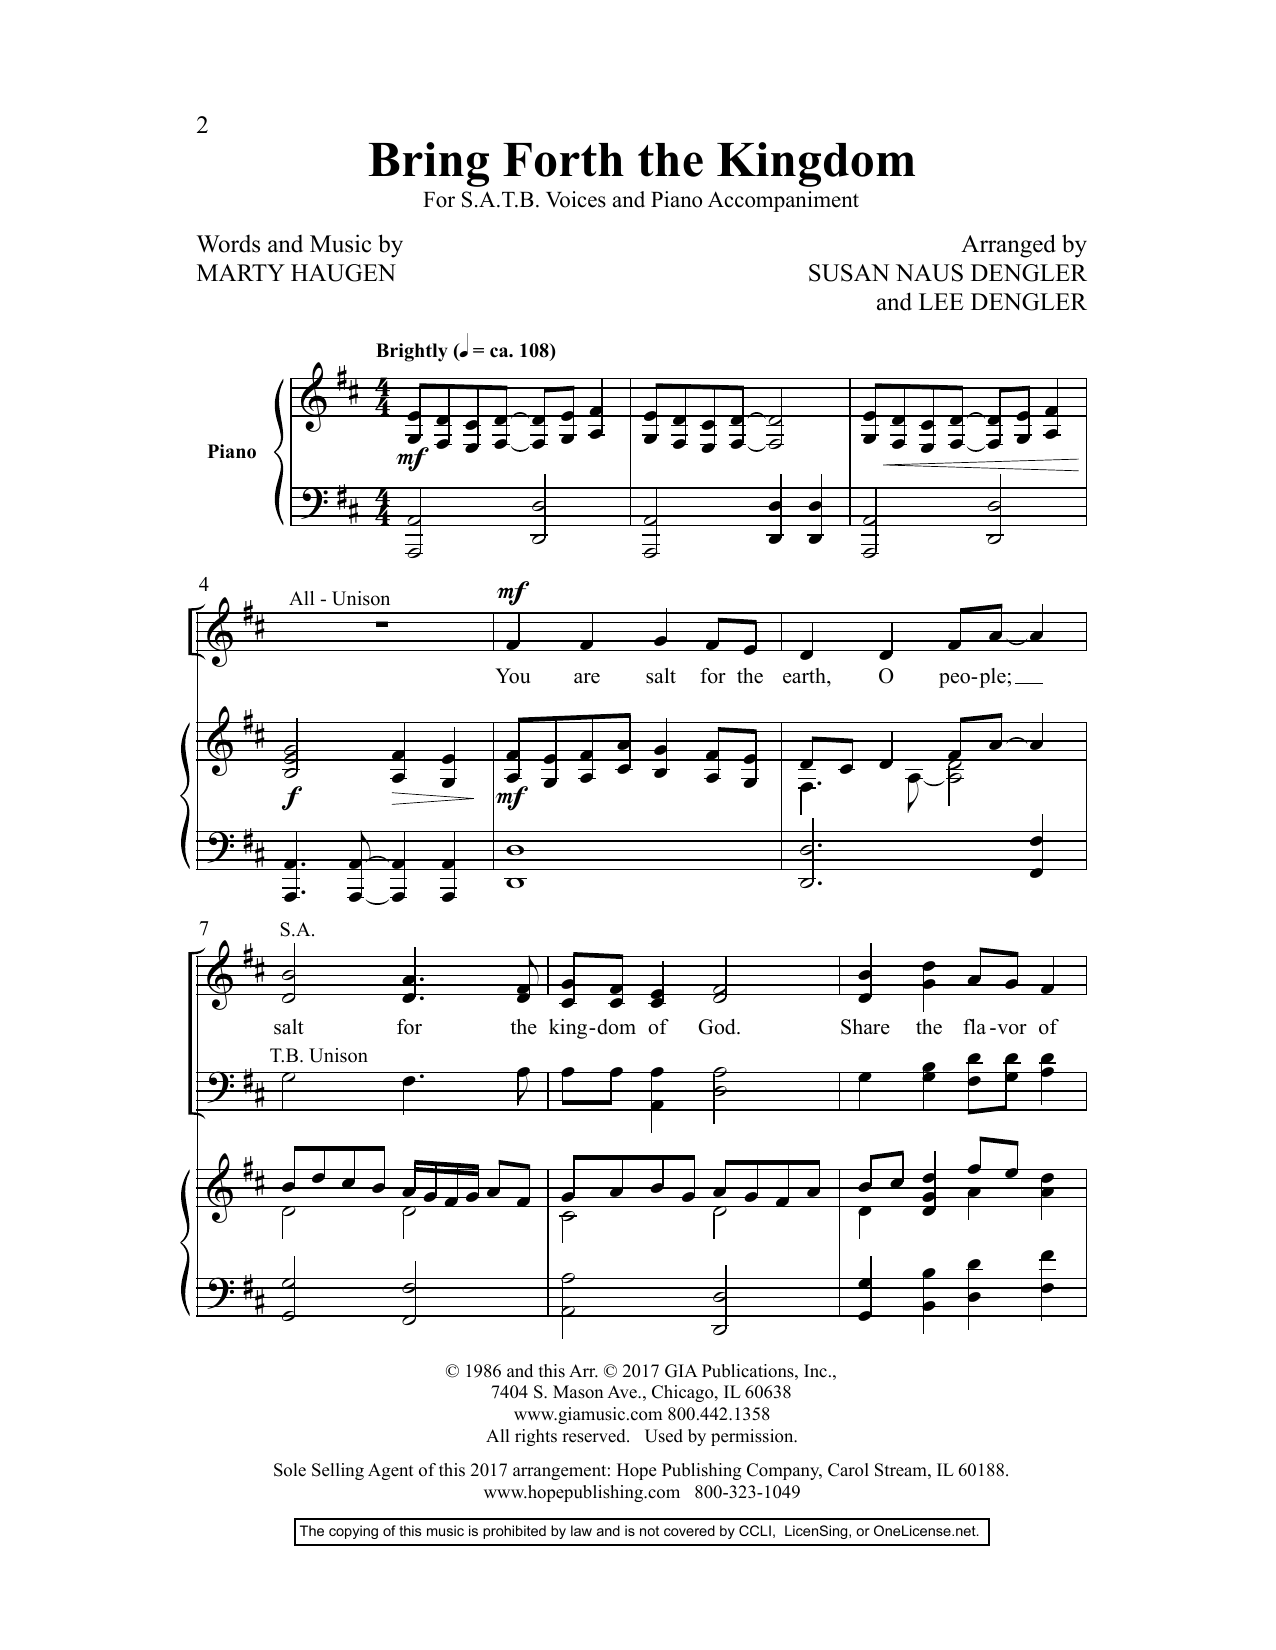 Lee Dengler Bring Forth The Kingdom Sheet Music Notes & Chords for Choir - Download or Print PDF